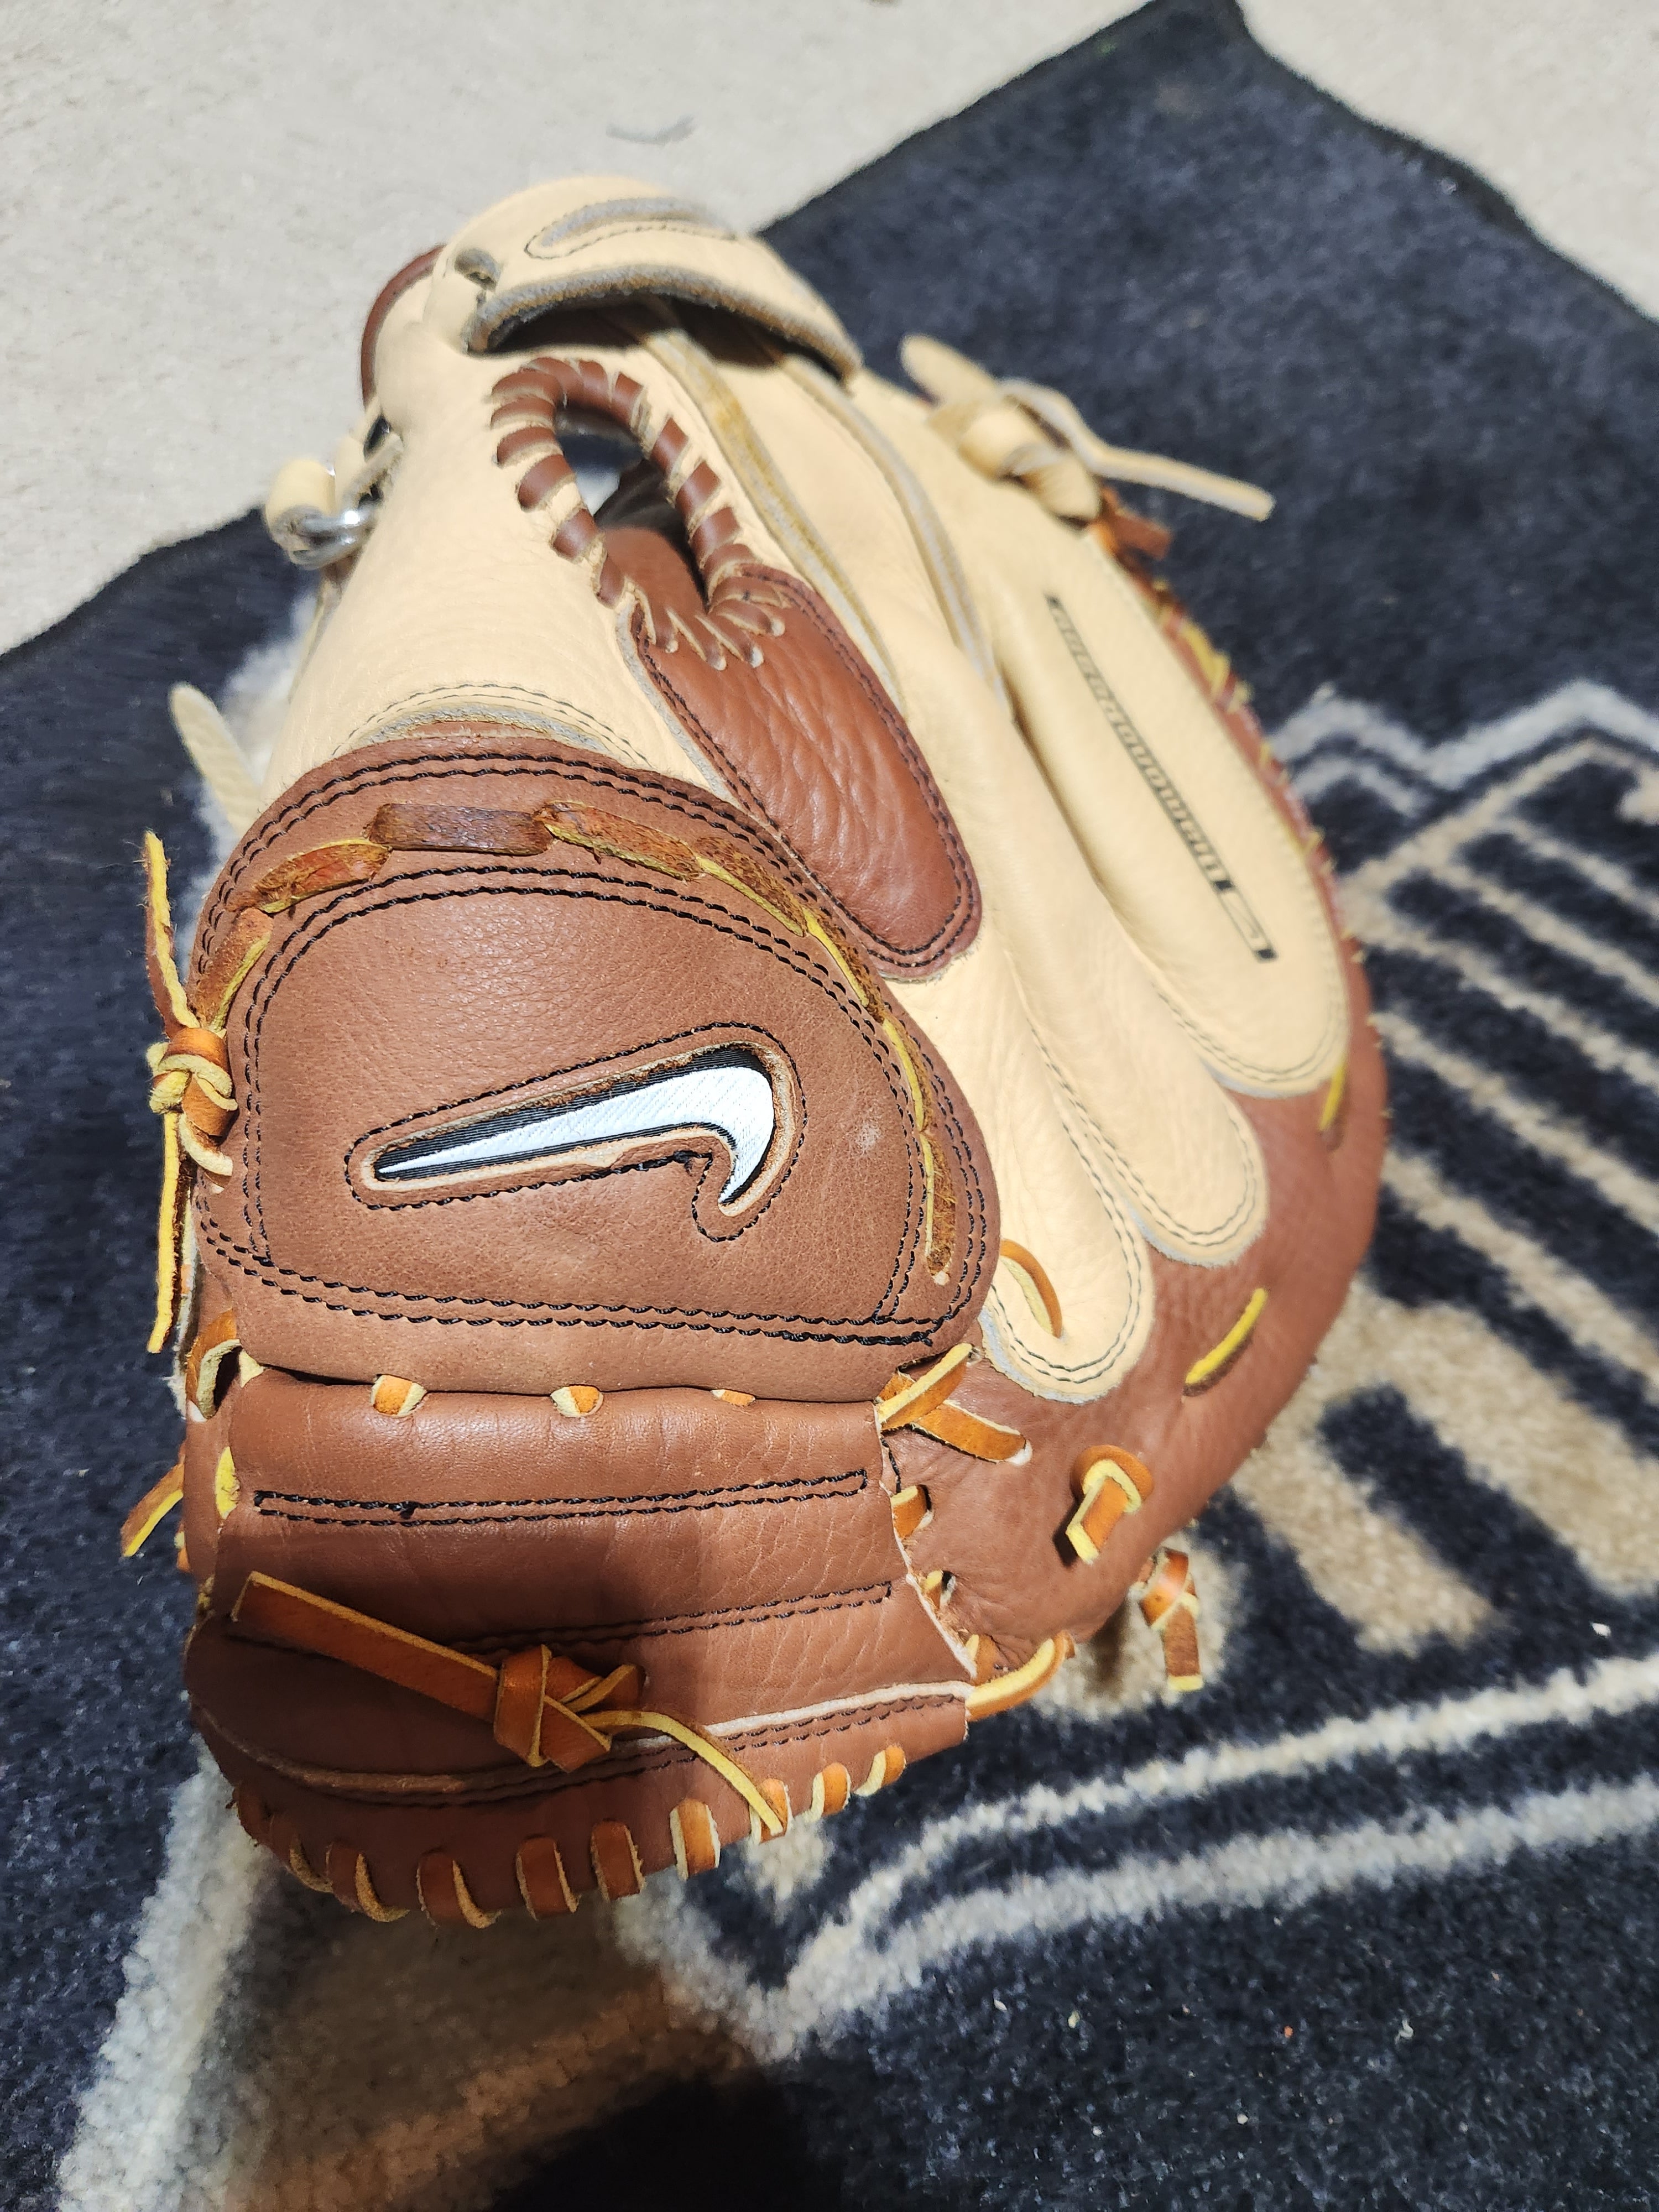 NIKE Signature Model Joh09 Baseball Catcher's Mitt Glove